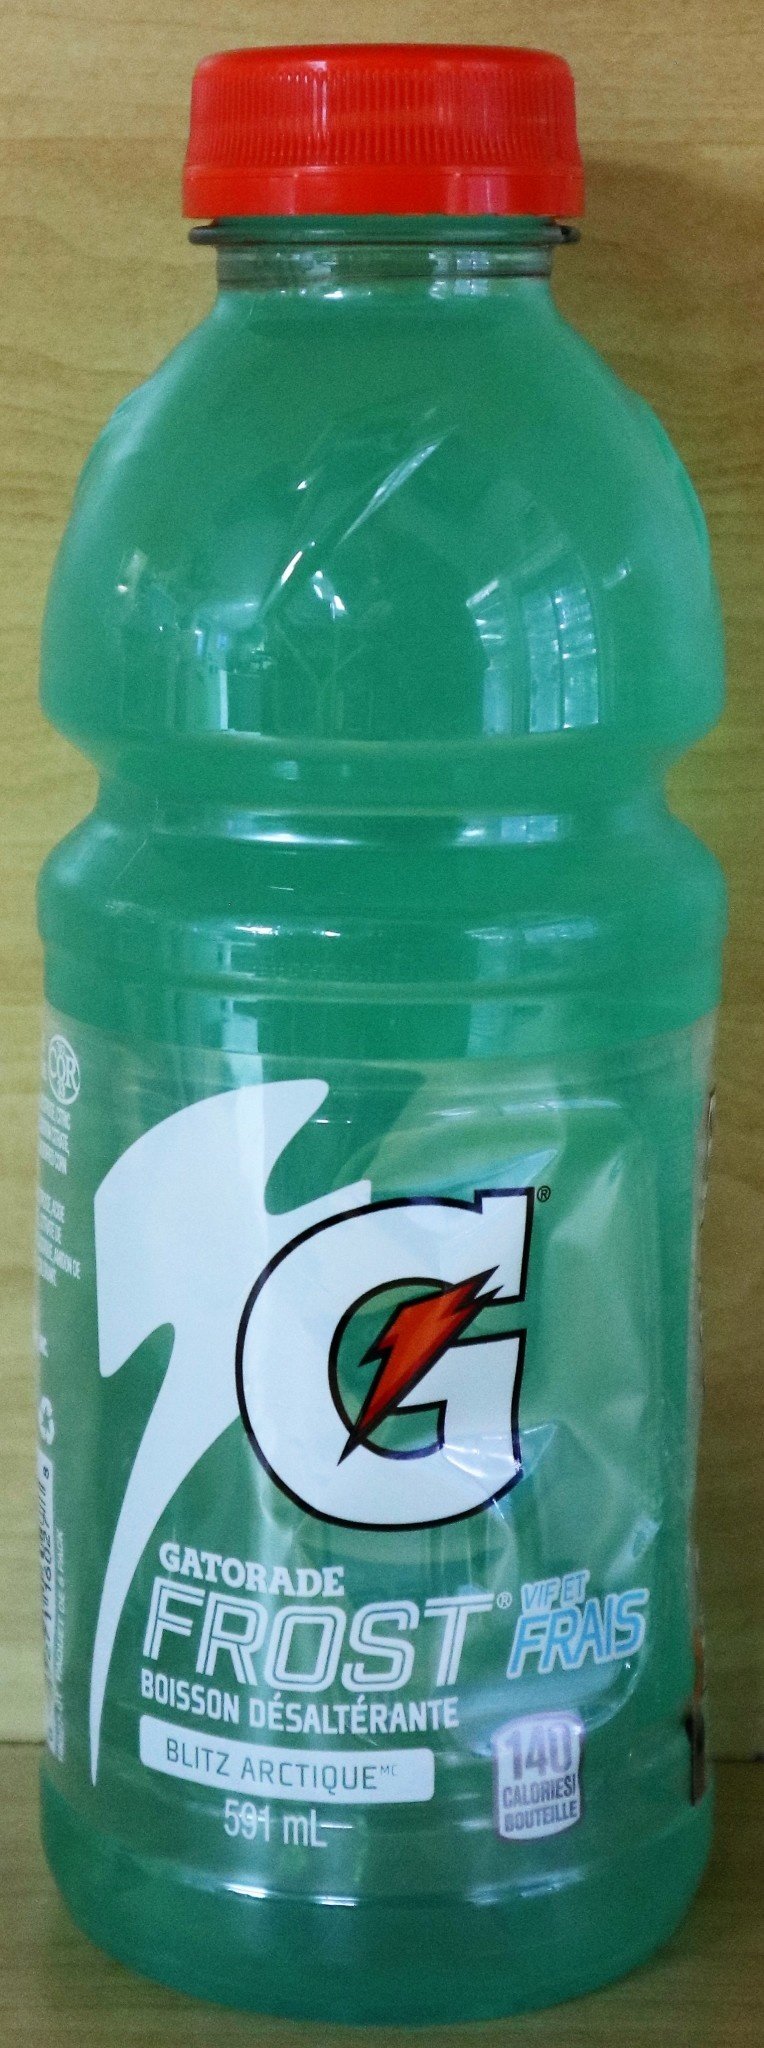 Gatorade Gatorade - Frost - Arctic Blitz - 591mL bottle